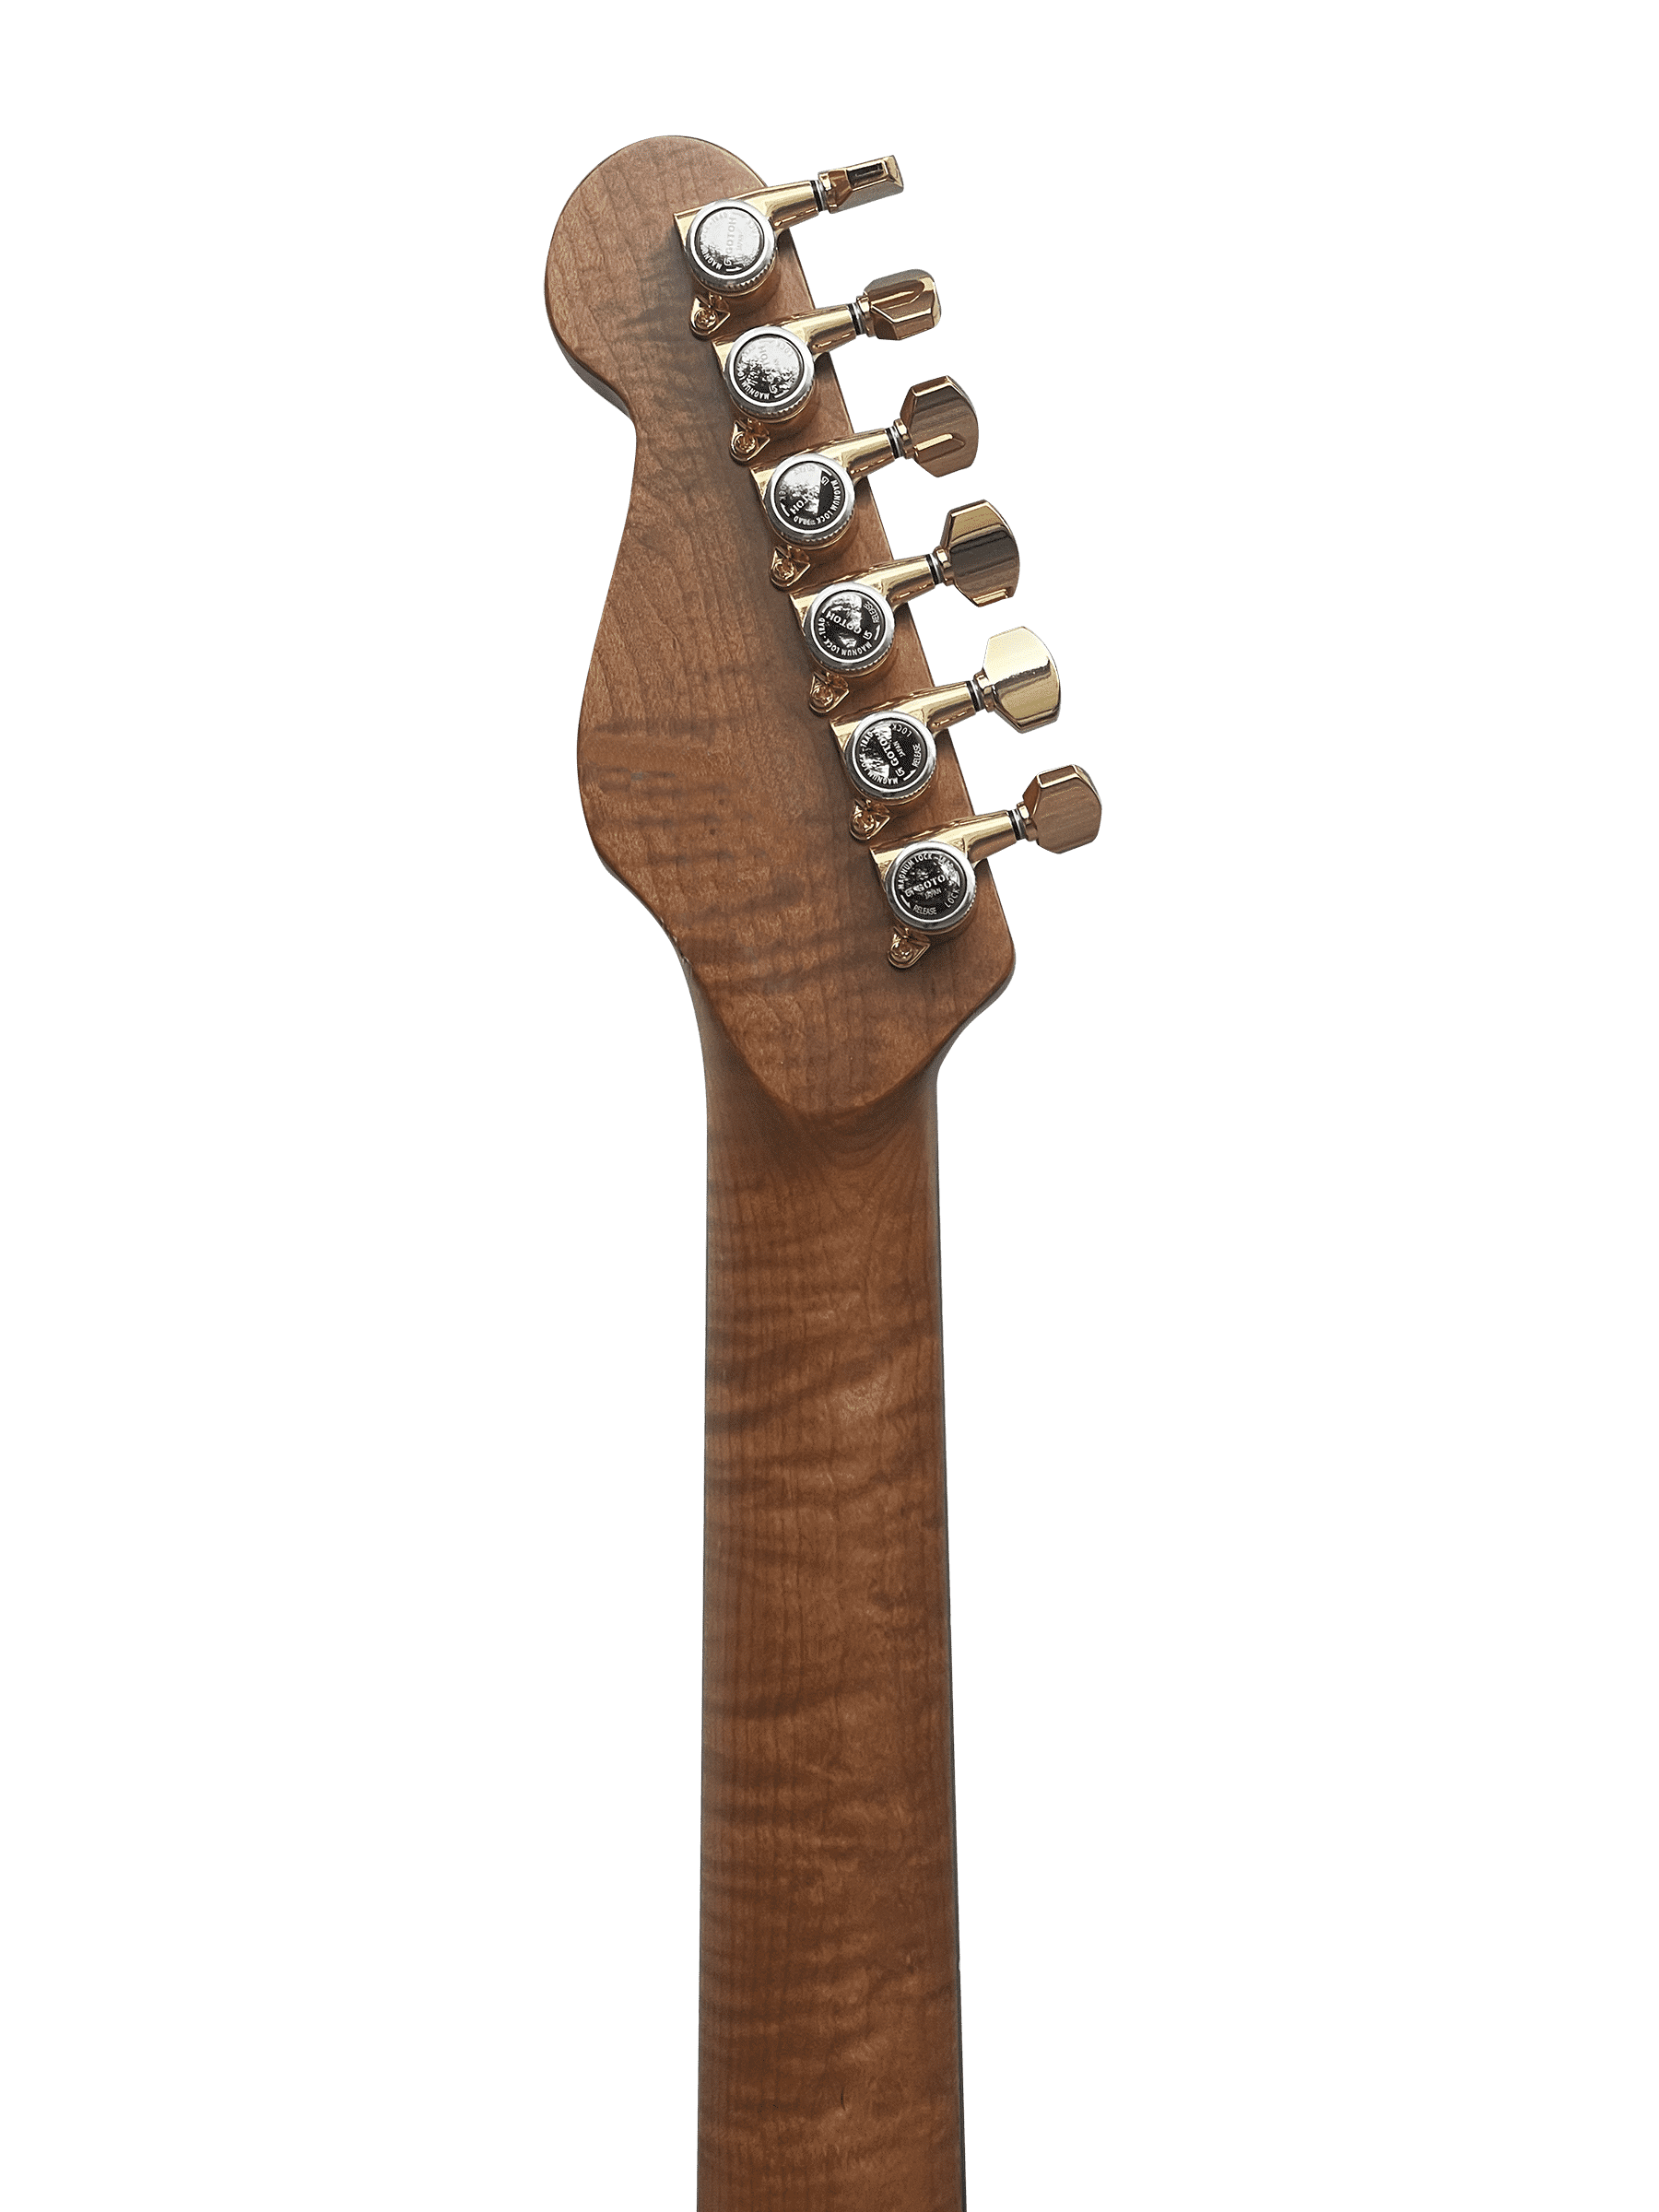 B-Magic CS Black & Gold Seymour Duncan Gotoh - 10S Guitars